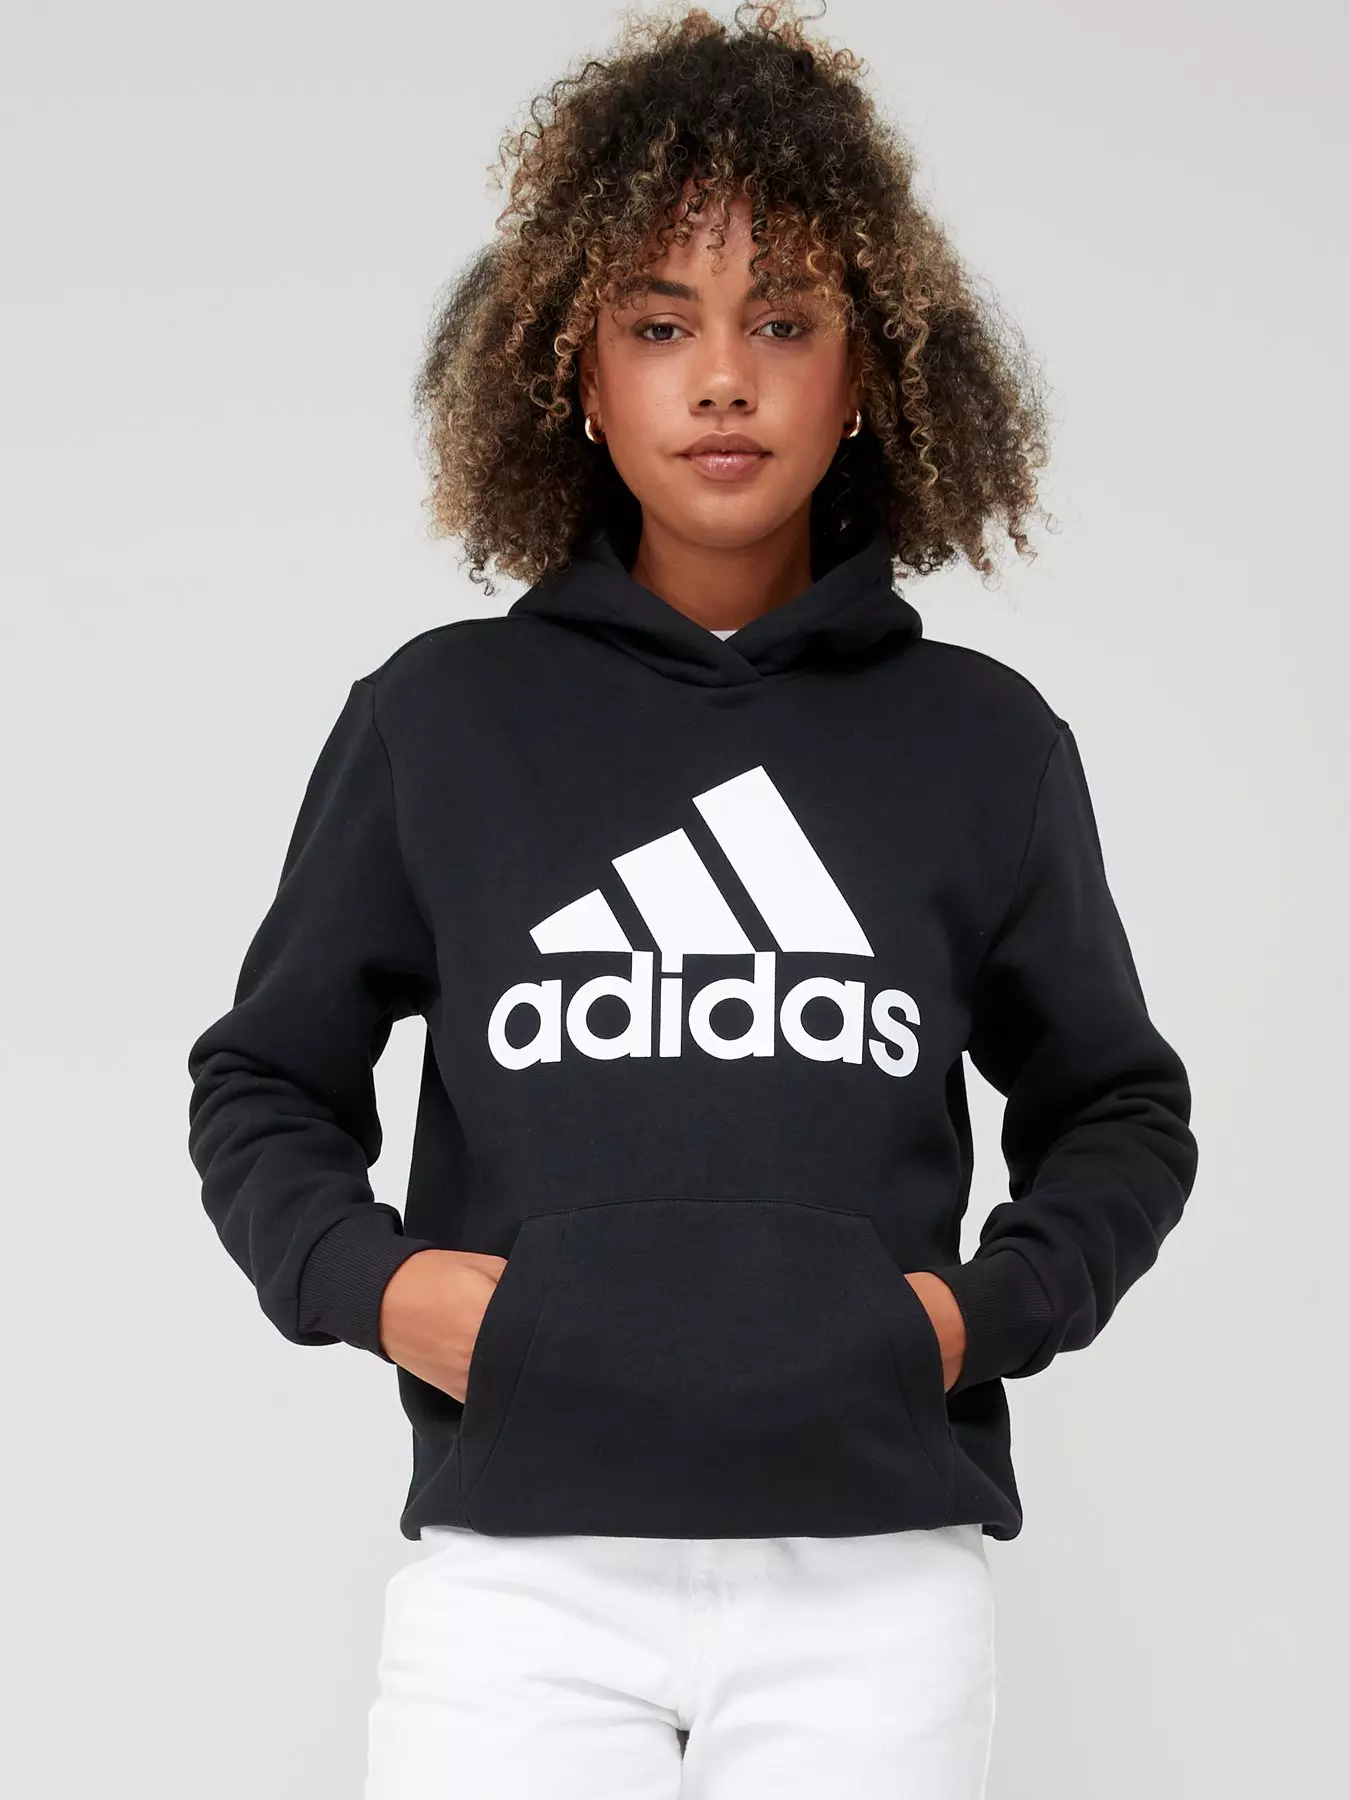 Adidas | Hoodies & sweatshirts | Sportswear | Women | Very Ireland